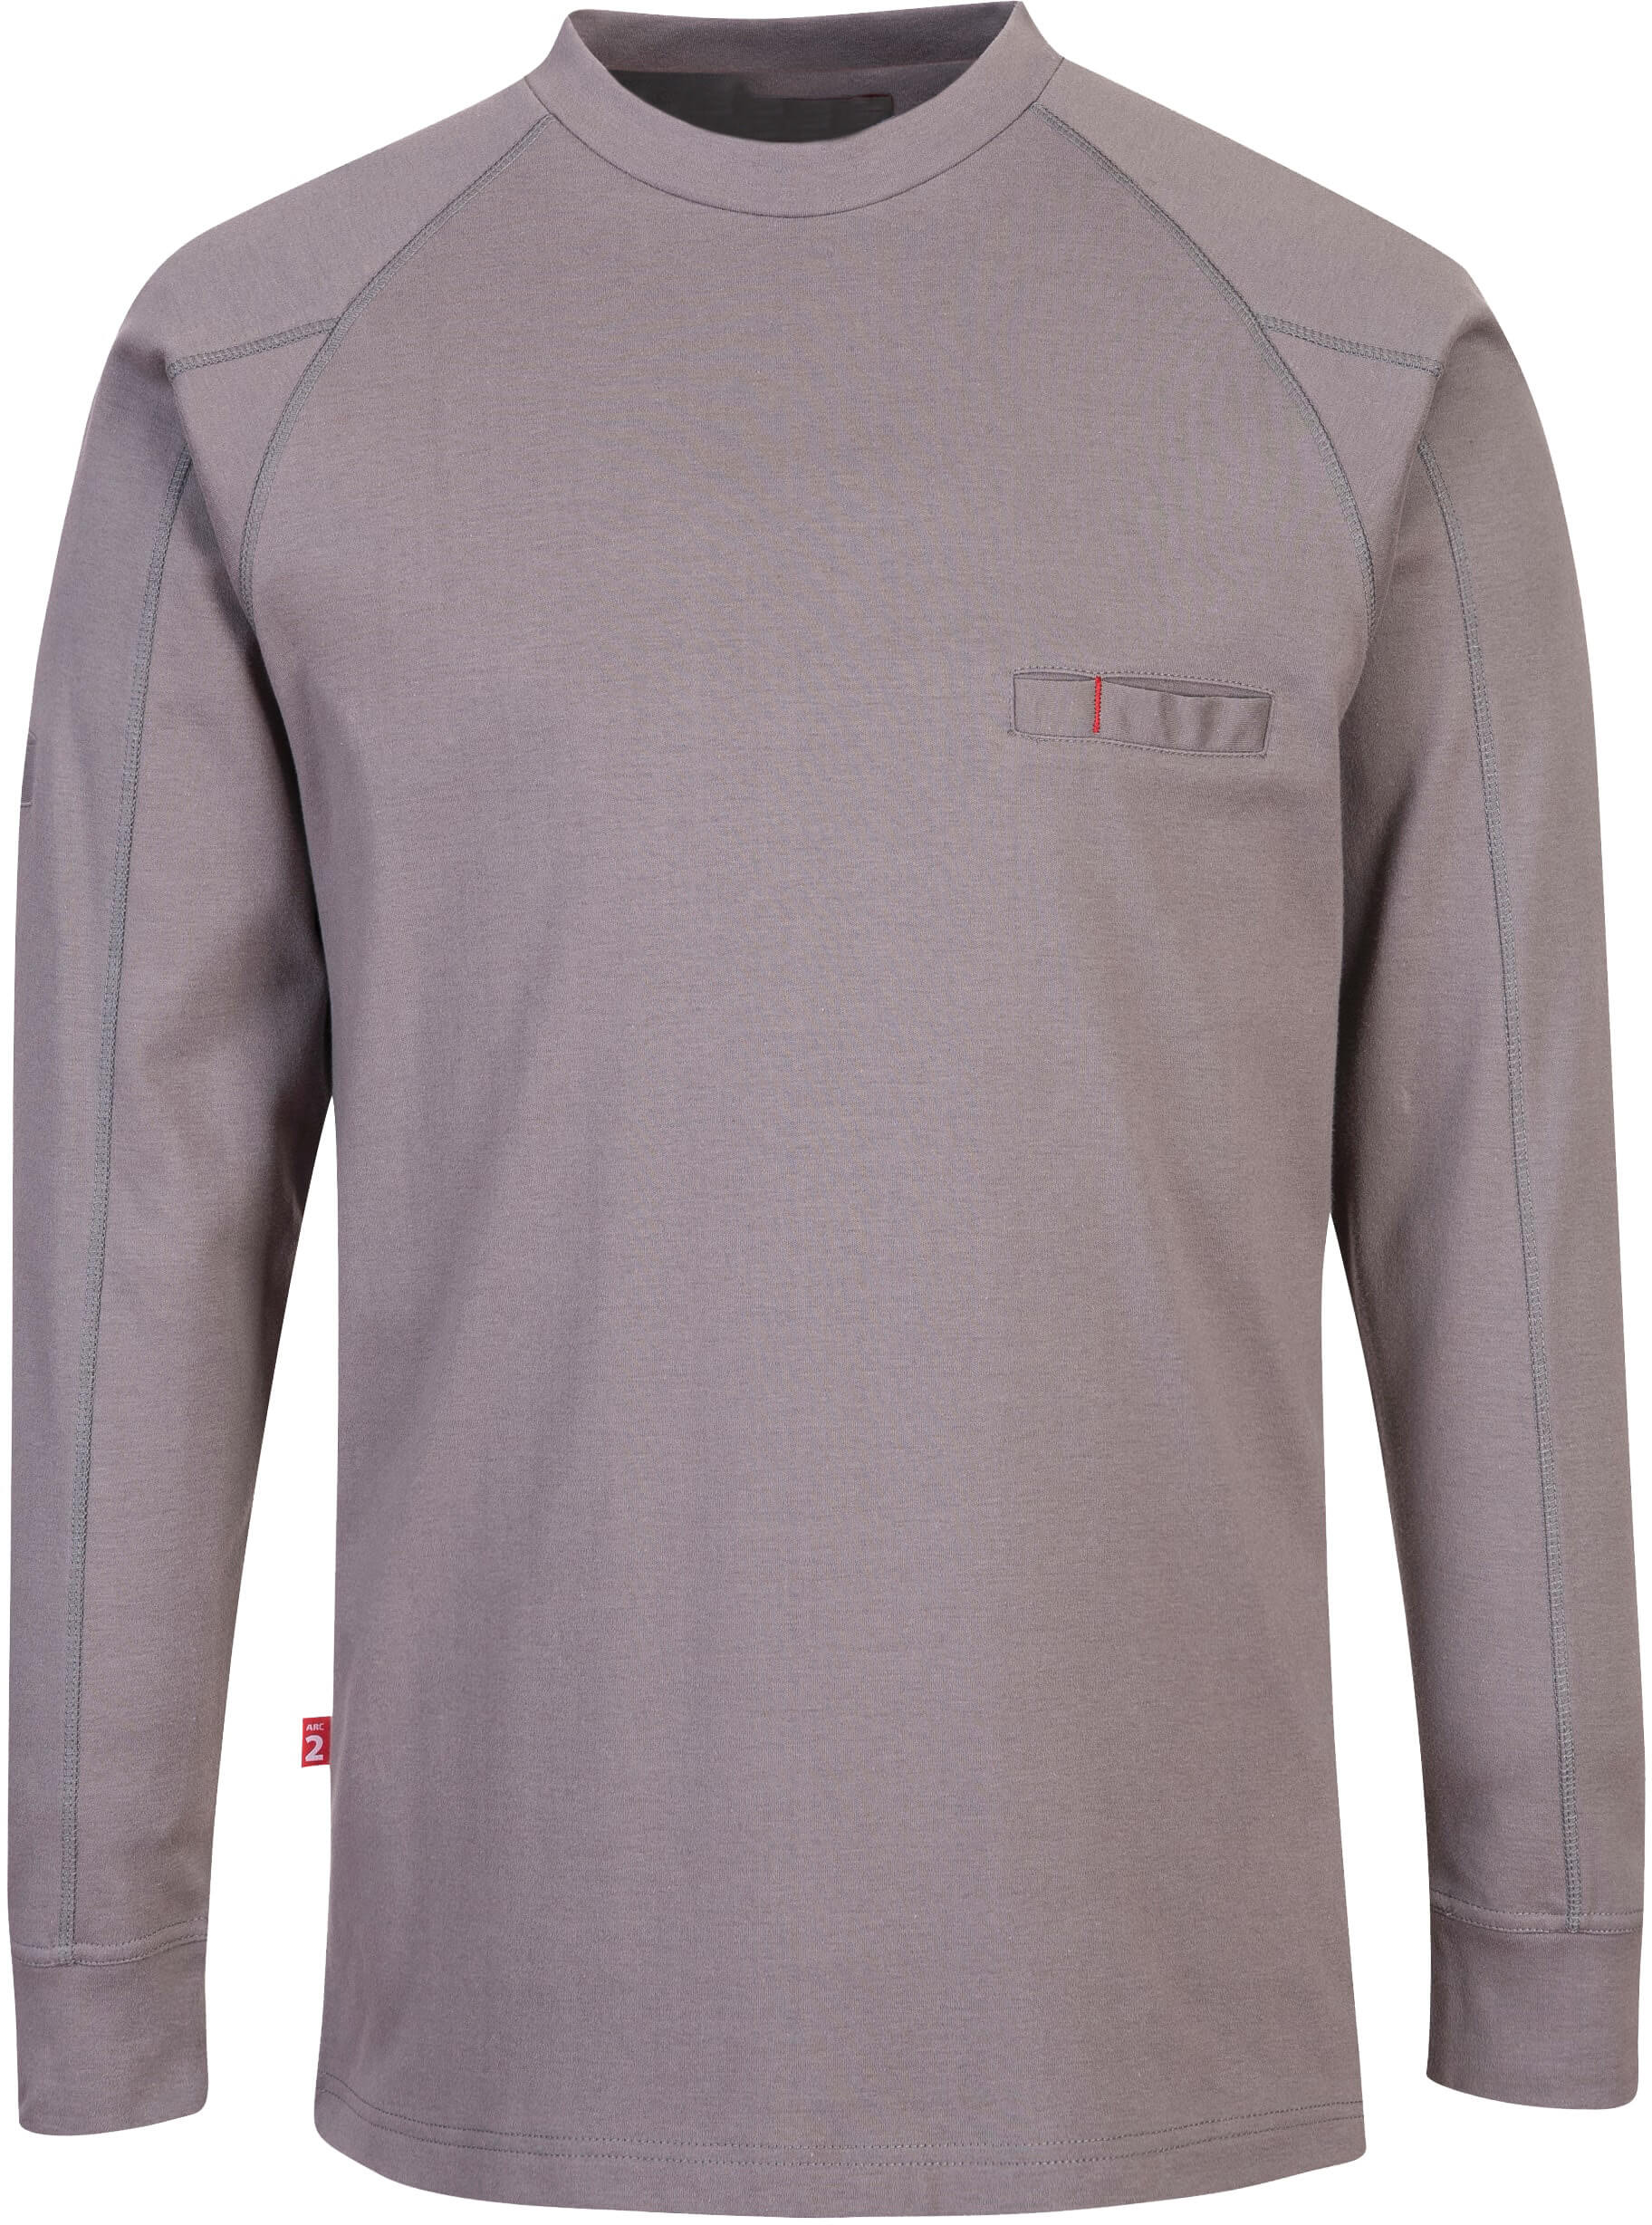 Flame Resistant (FR) Antistatic Crew Neck T-Shirt, 7 oz